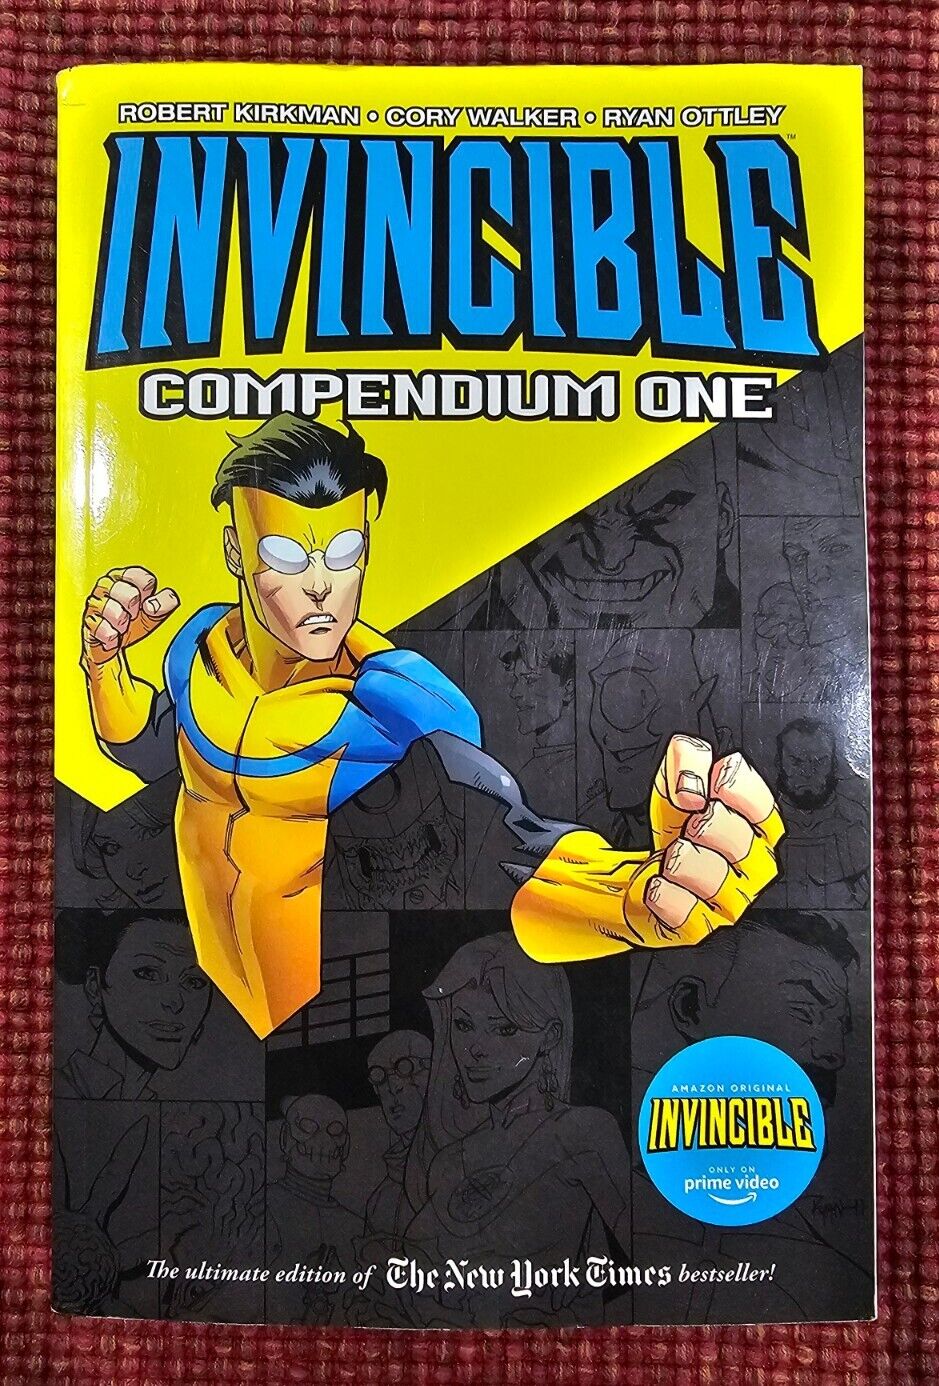 Invincible 2021 Compendium One Robert Kirkman Ultimate Edition Volume, 47 Issues